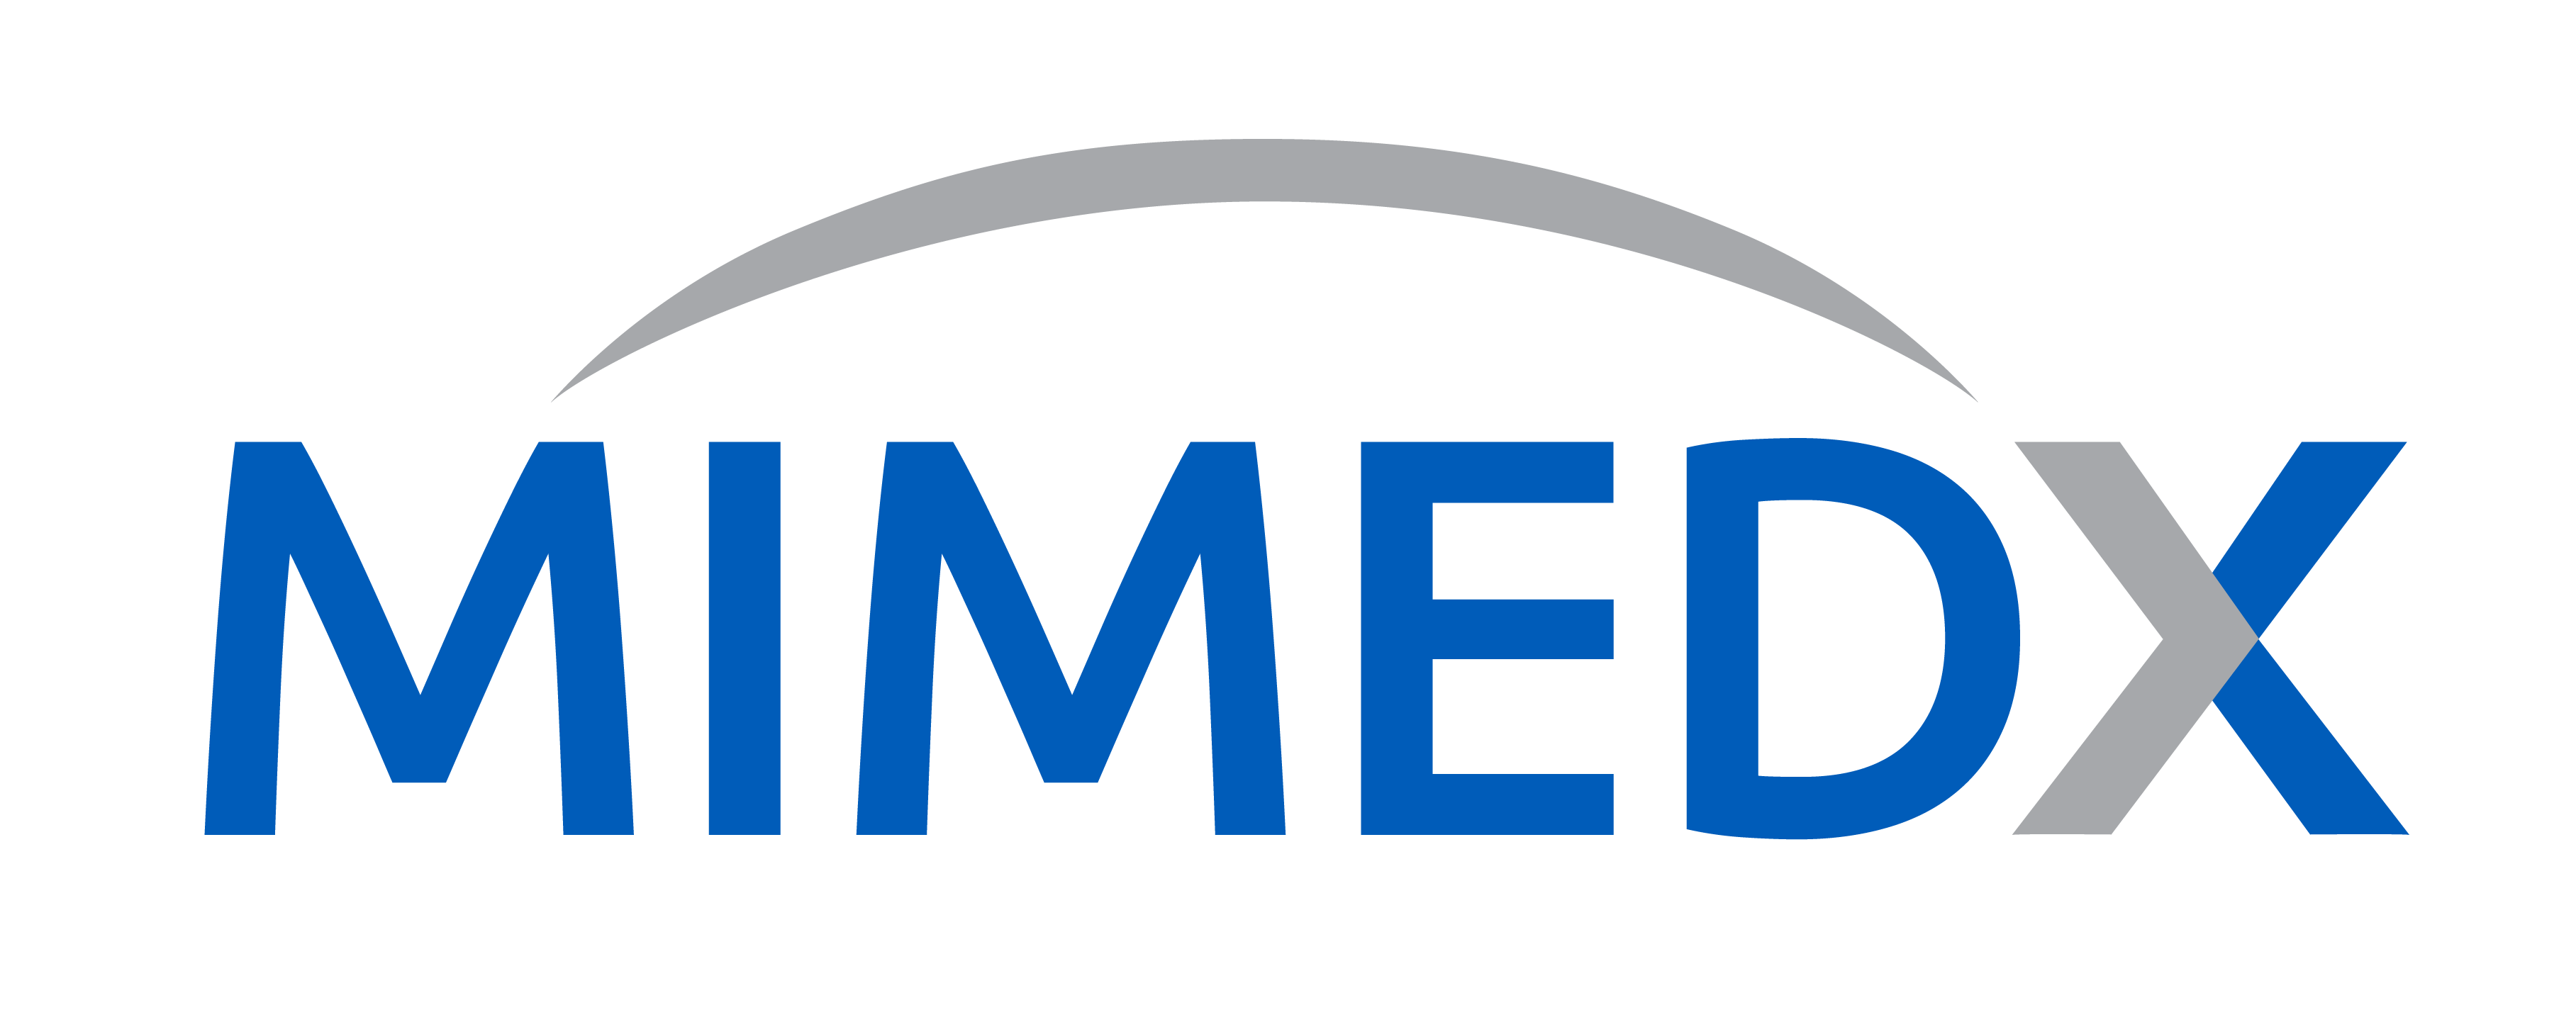 MIMEDEX logo